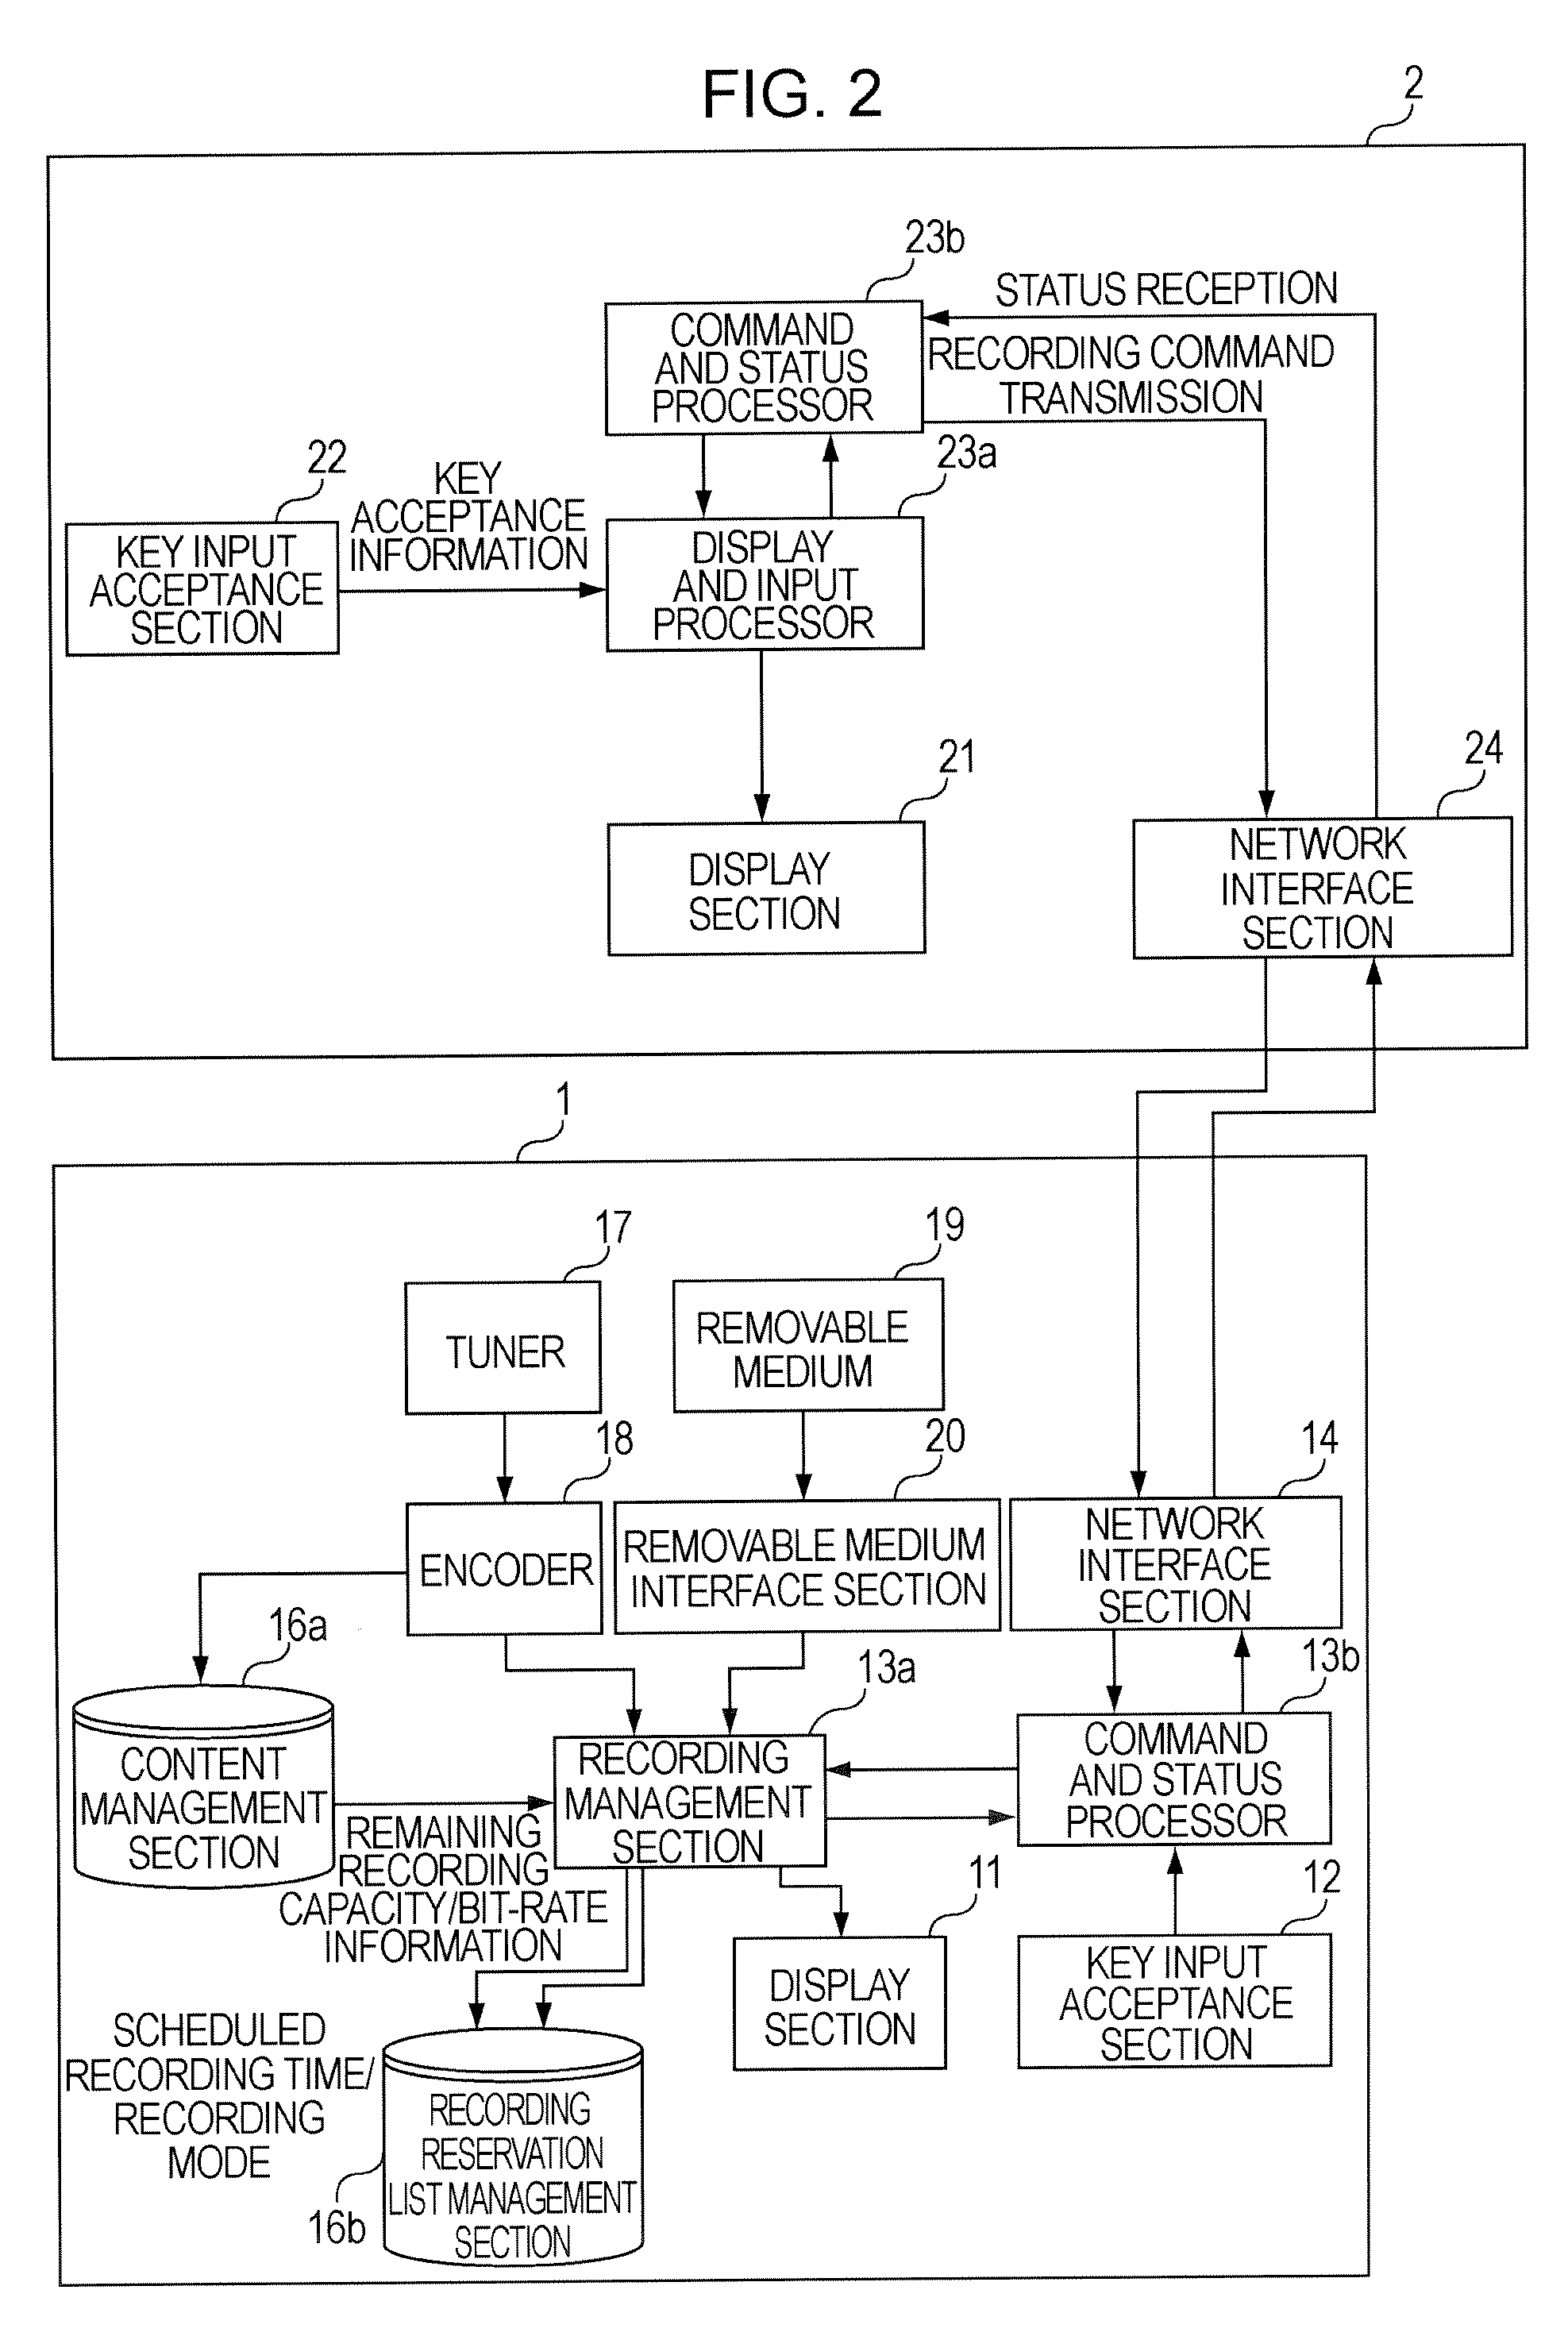 Program recording reservation system, recording apparatus, and controller apparatus